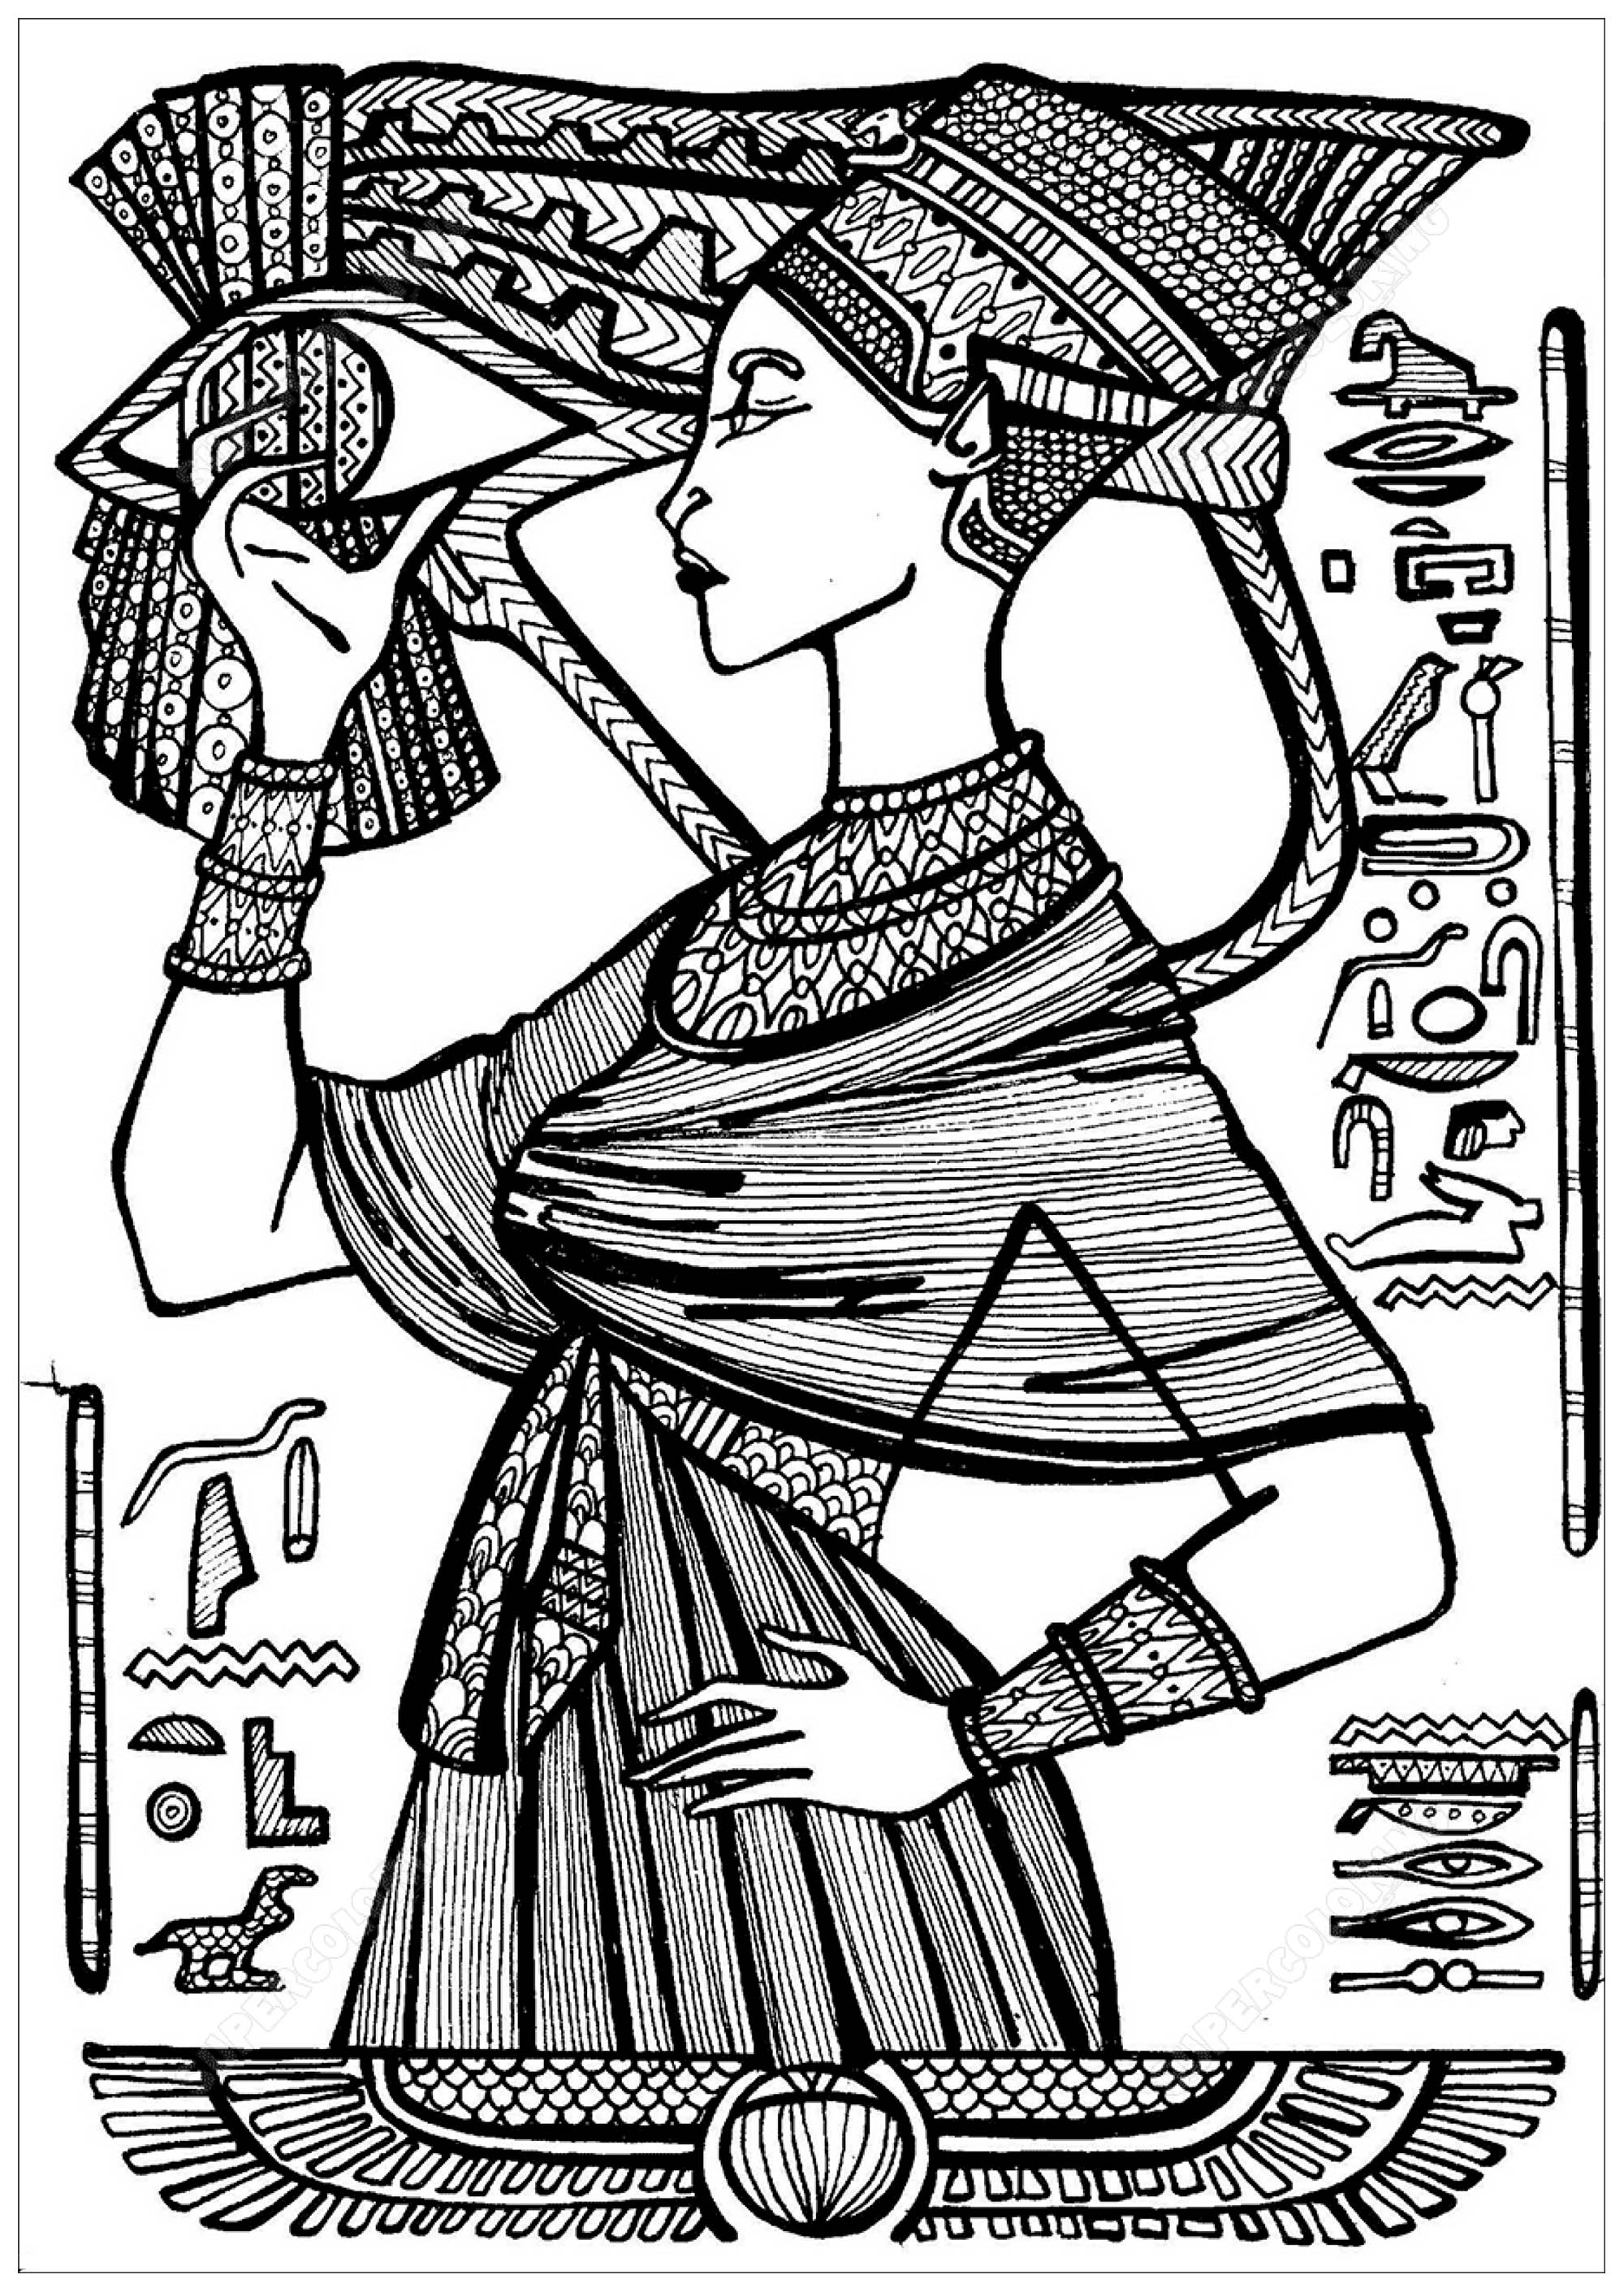 Cléopâtre, Reine d'Égypte, Artiste : Krivosheeva Olga (Ori Akuma)   Source : Supercoloring